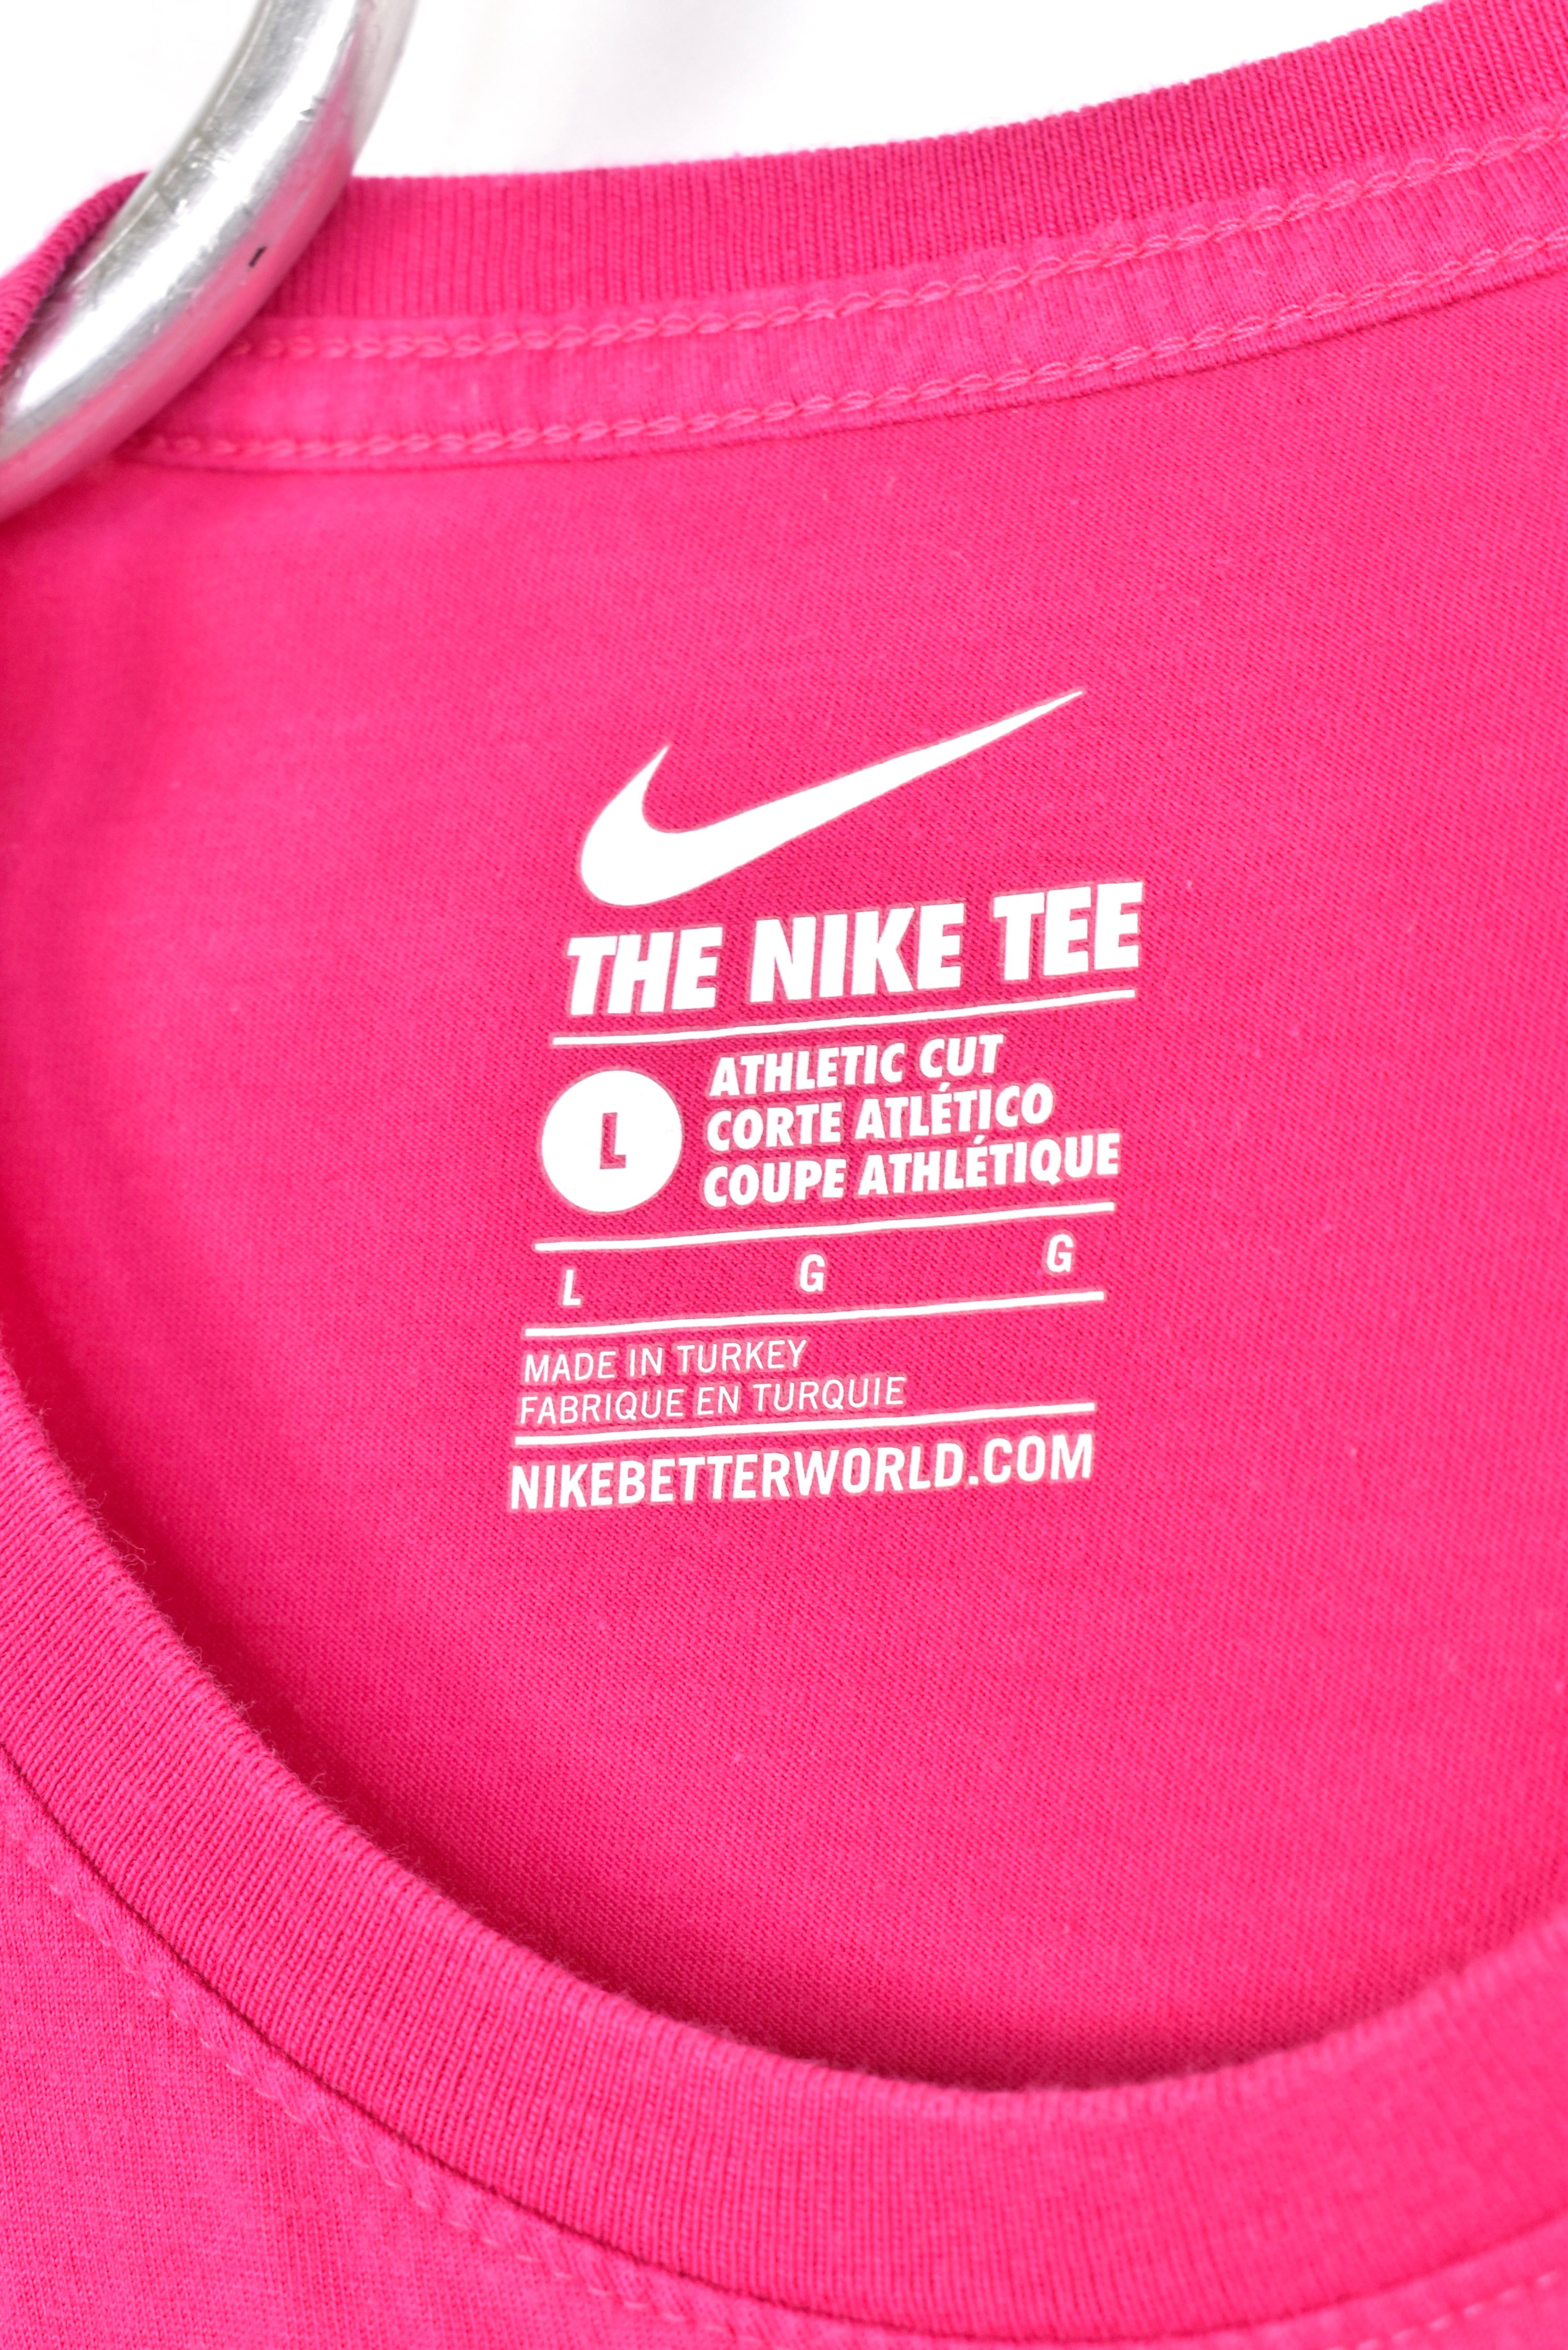 Women's modern Nike shirt, pink graphic tee - AU L NIKE